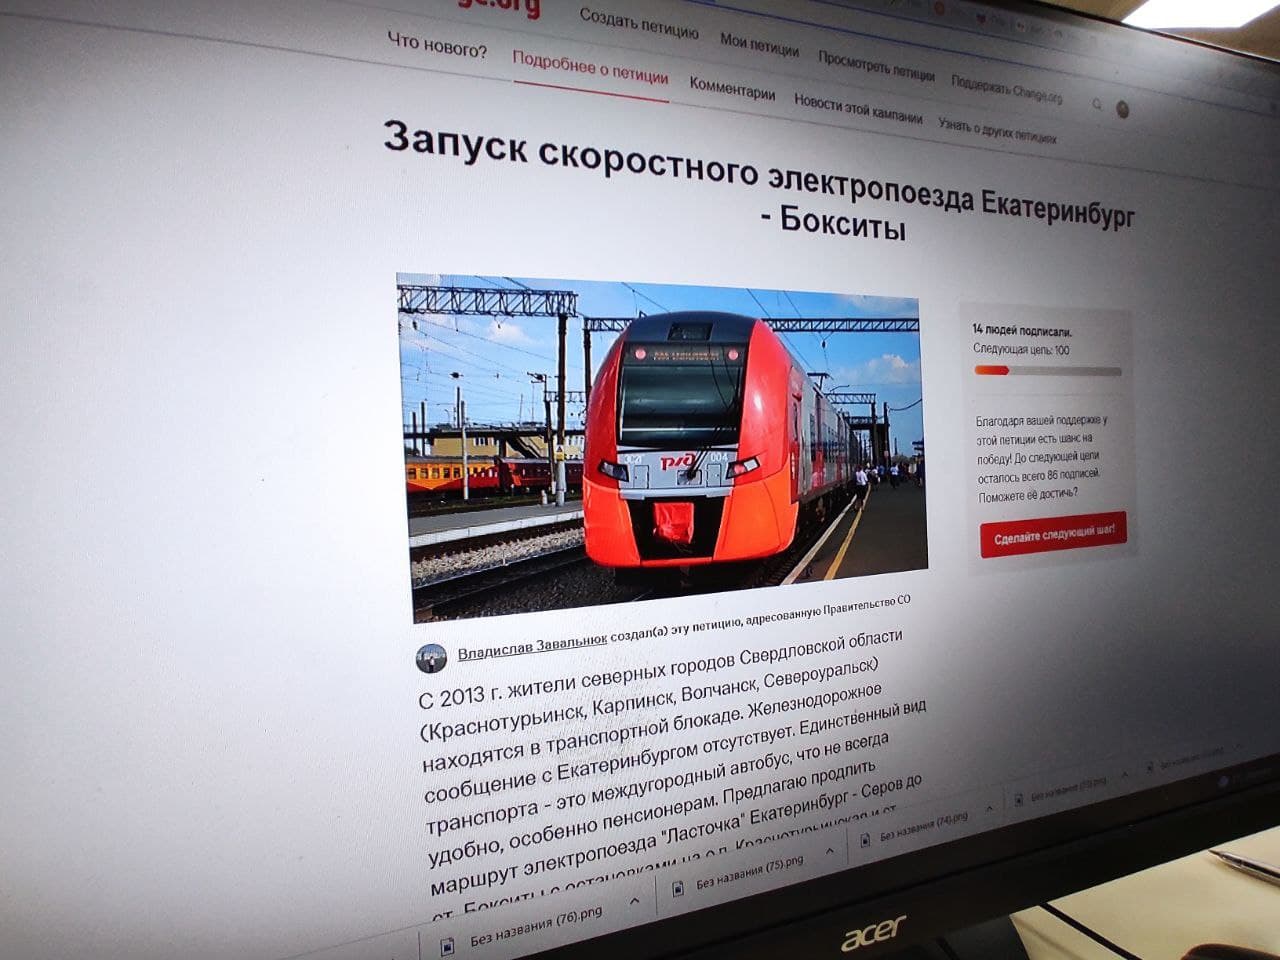 Серовчанин опубликовал петицию о запуске скоростного электропоезда Екатеринбург - Бокситы